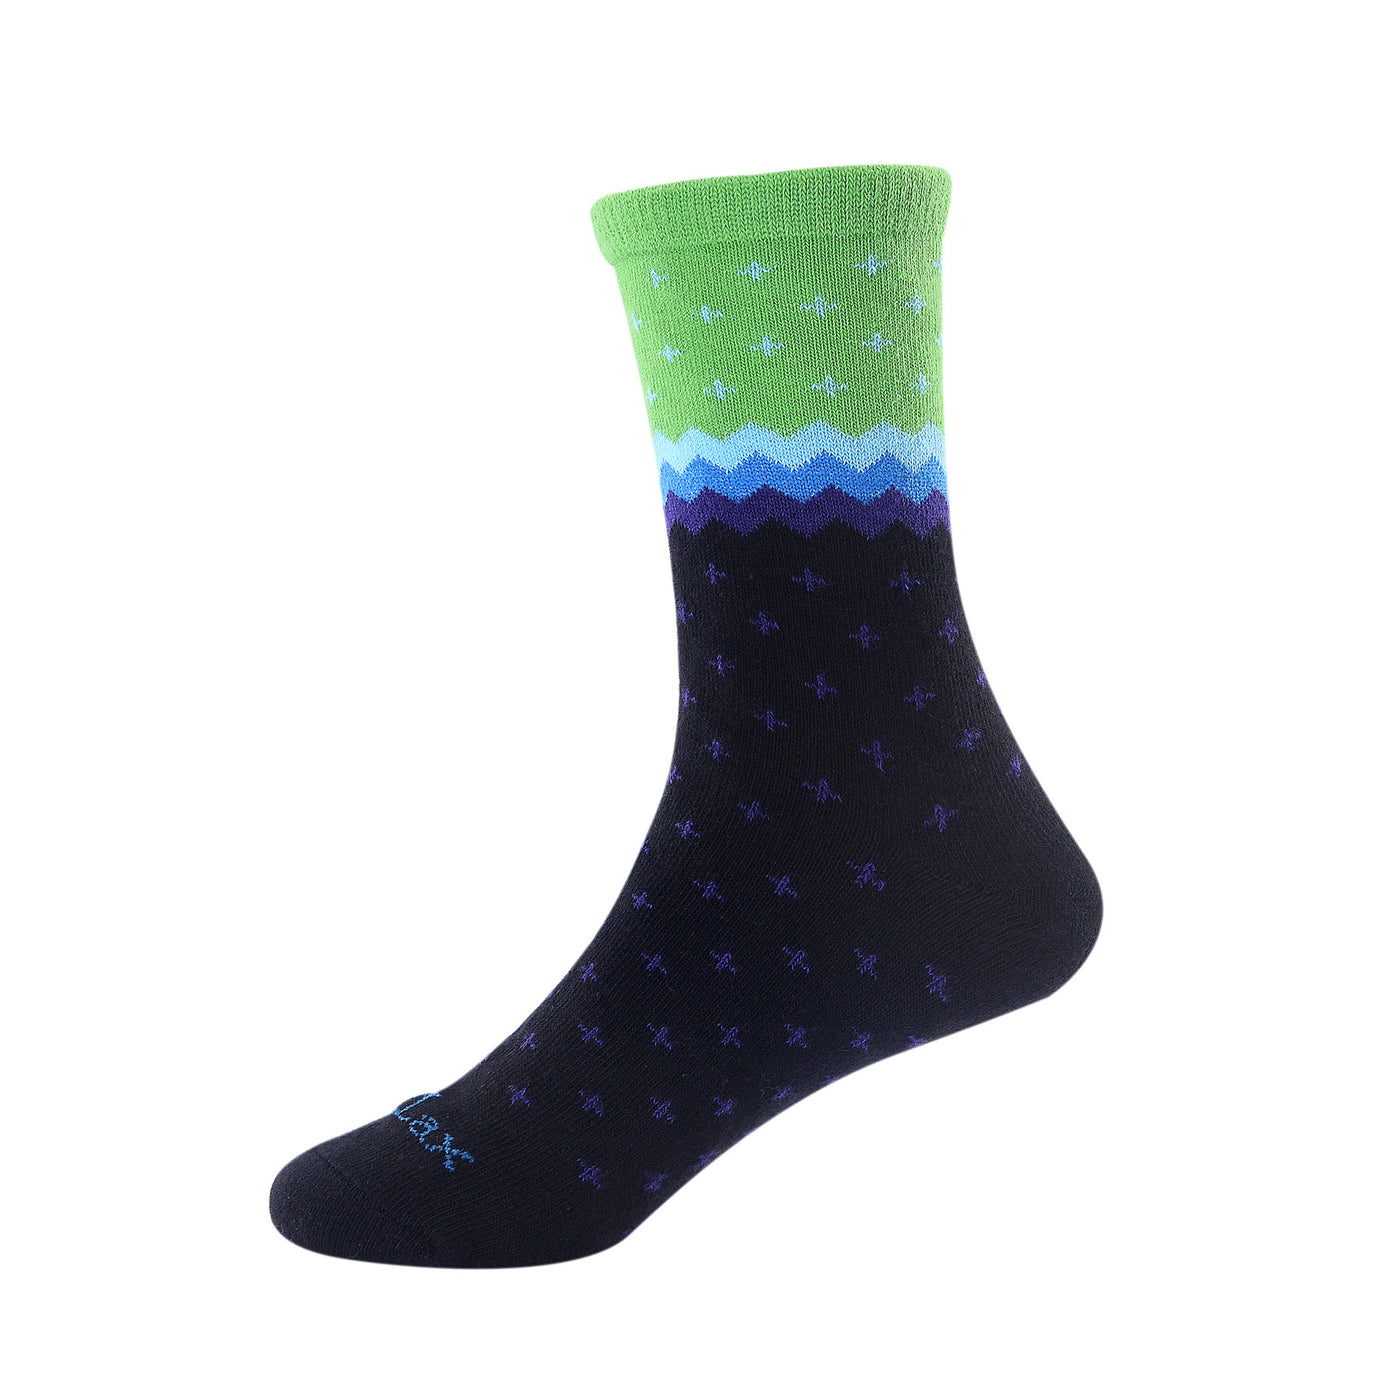 Deep Sea Laulax 6 Pairs Combed Cotton Girl's Socks Size UK 9-11.5/Europe 27-30 Gift Set